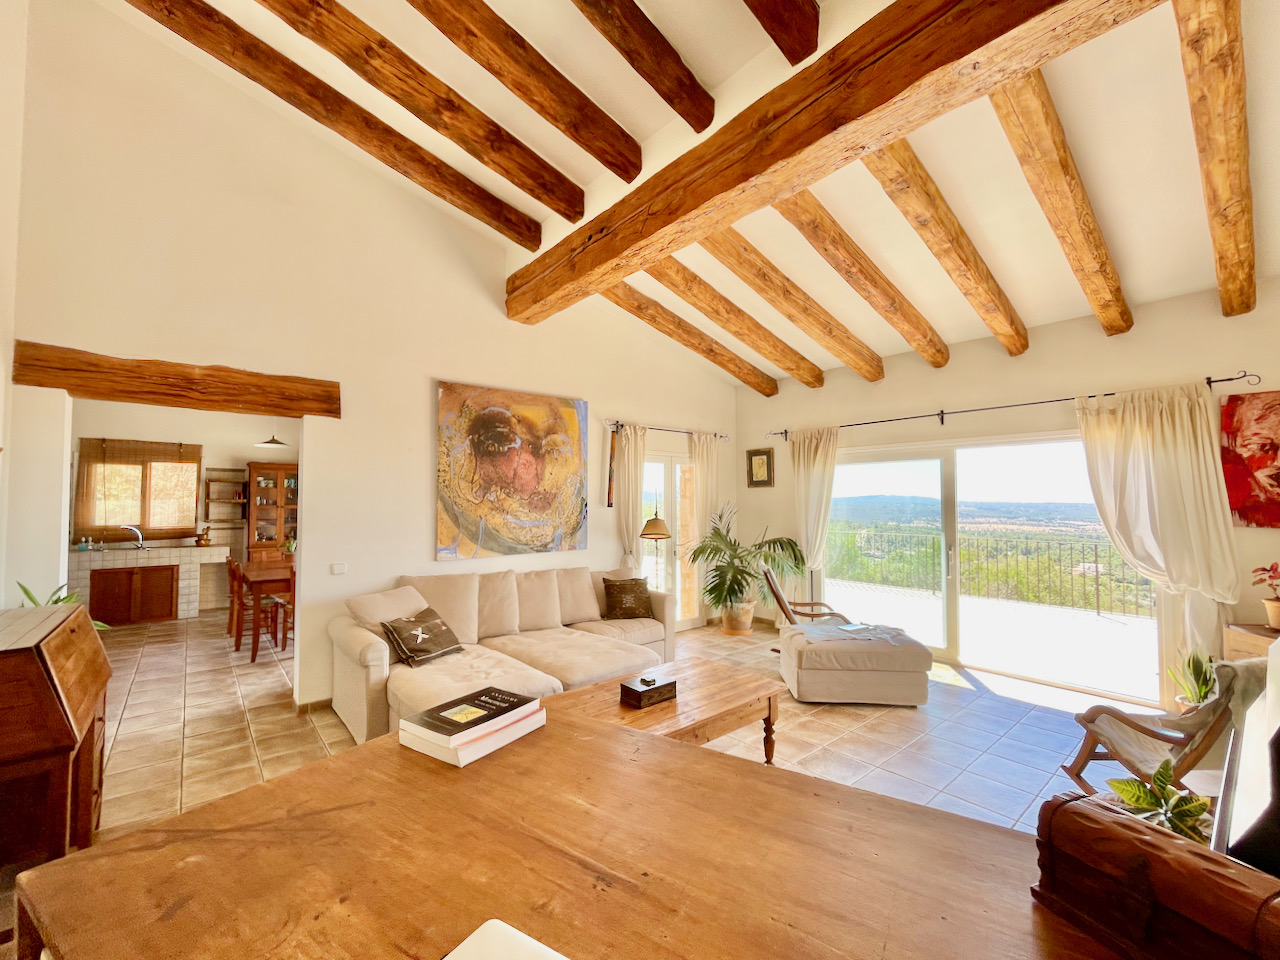 Fantastic contemporary rustic villa with spectacular views in Puntiró, Mallorca.